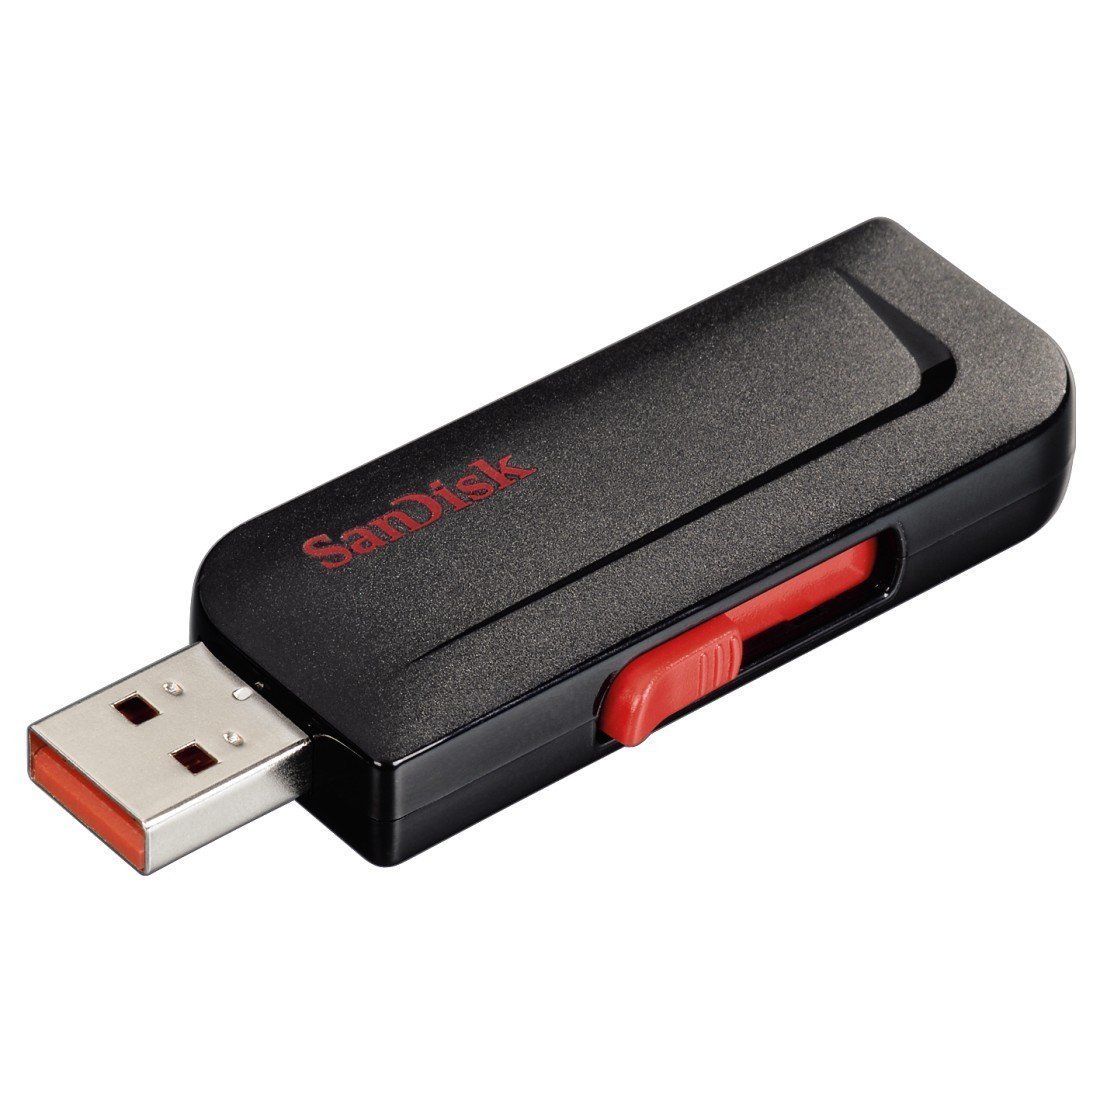 Sandisk Cruzer Slice 16GB USB Flash Drive